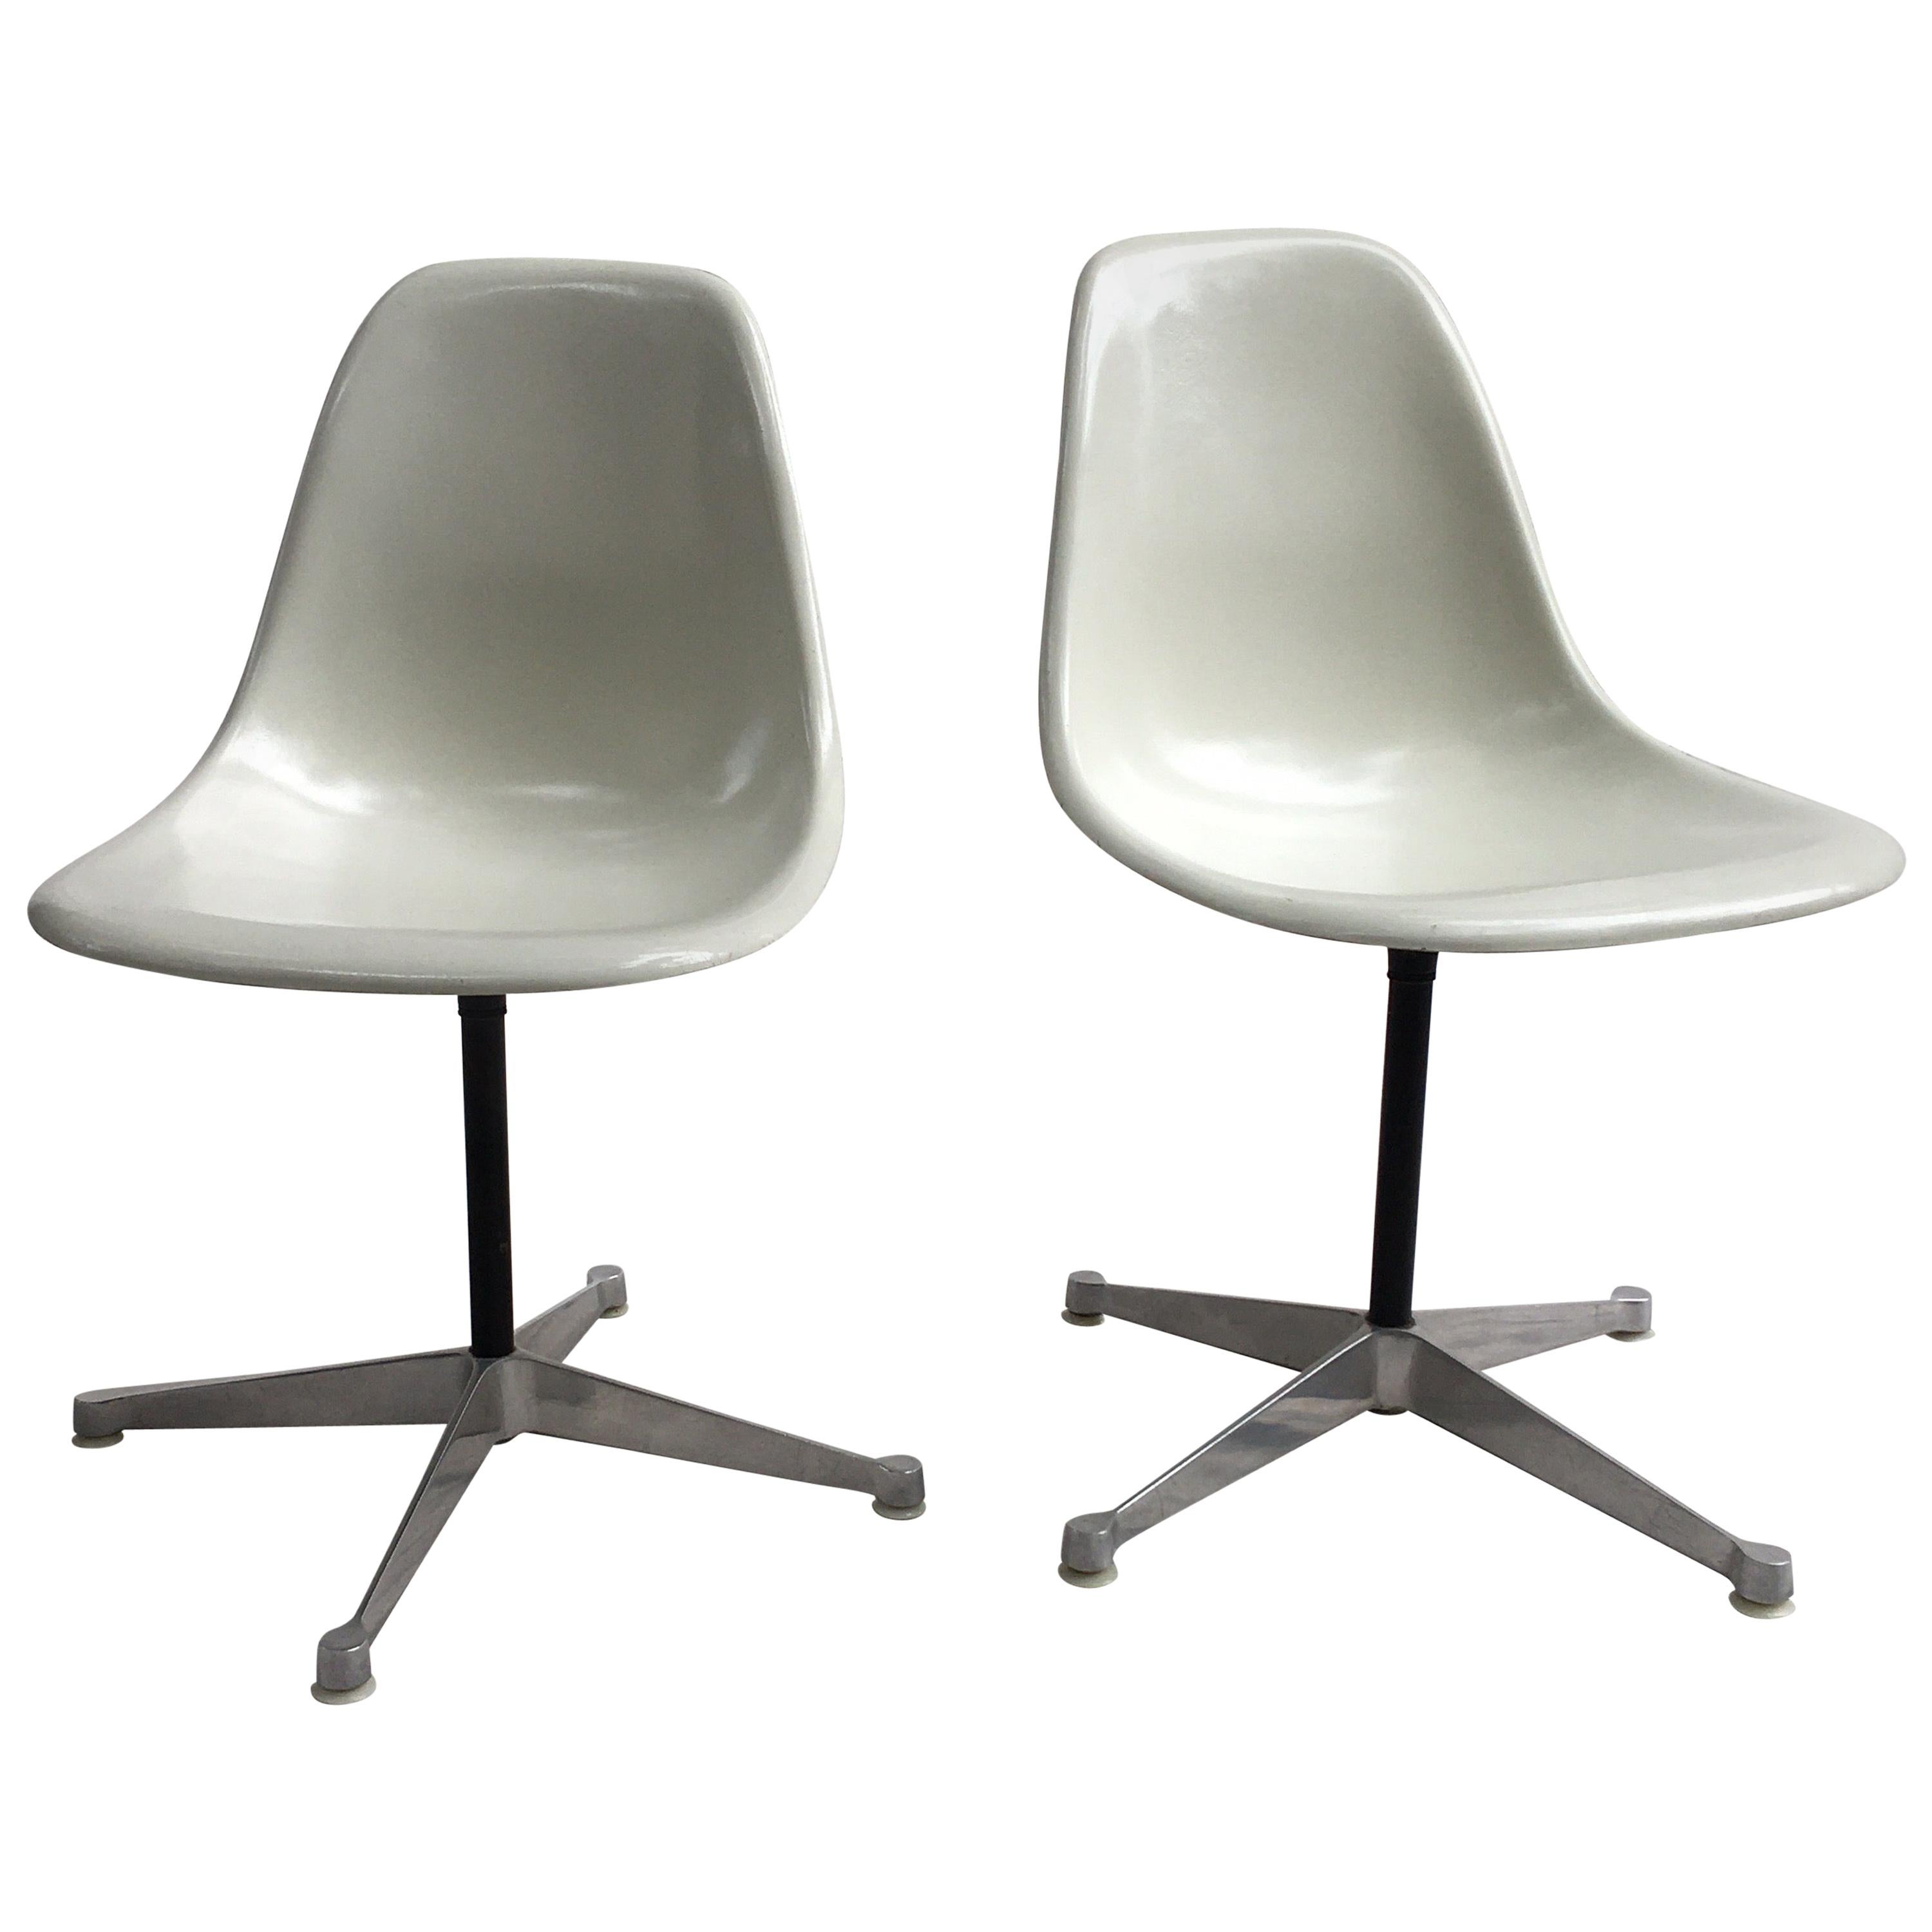  Eames for Herman Miller Fiberglass Chair  1 CHAIR LEFT!